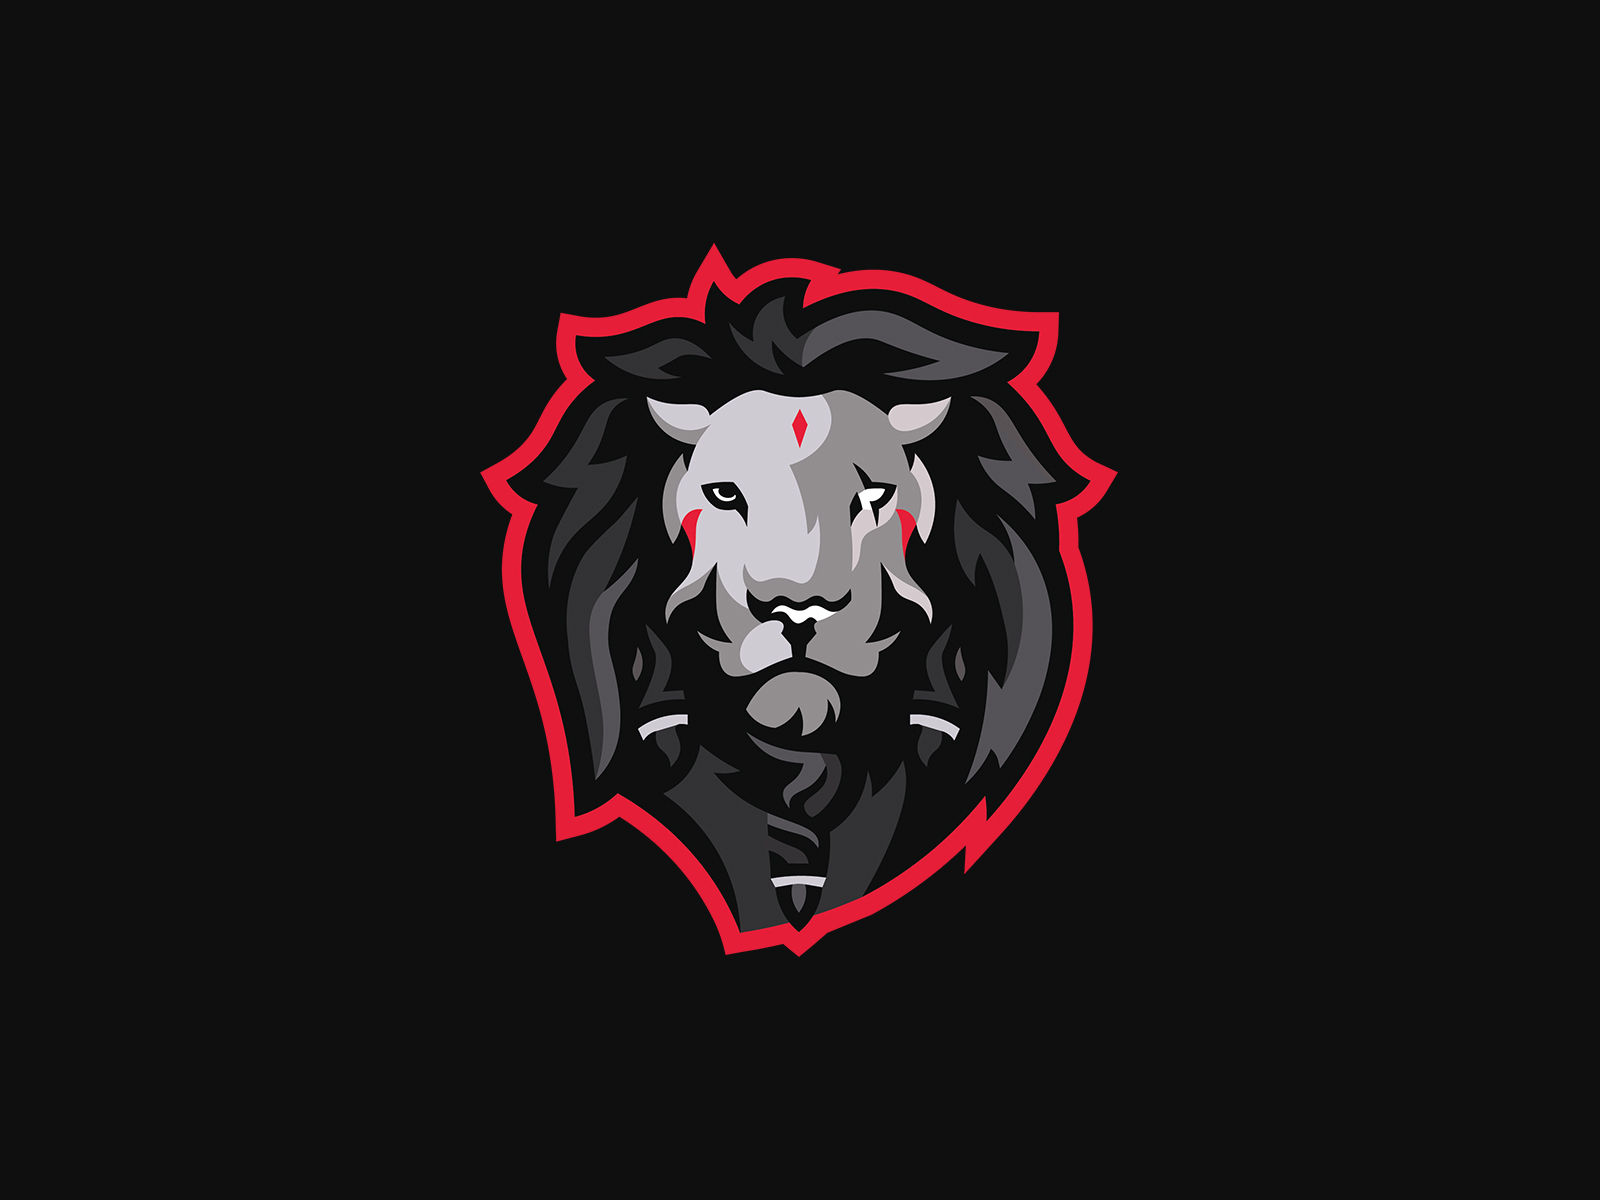 Free: Lion logo design vector image - nohat.cc